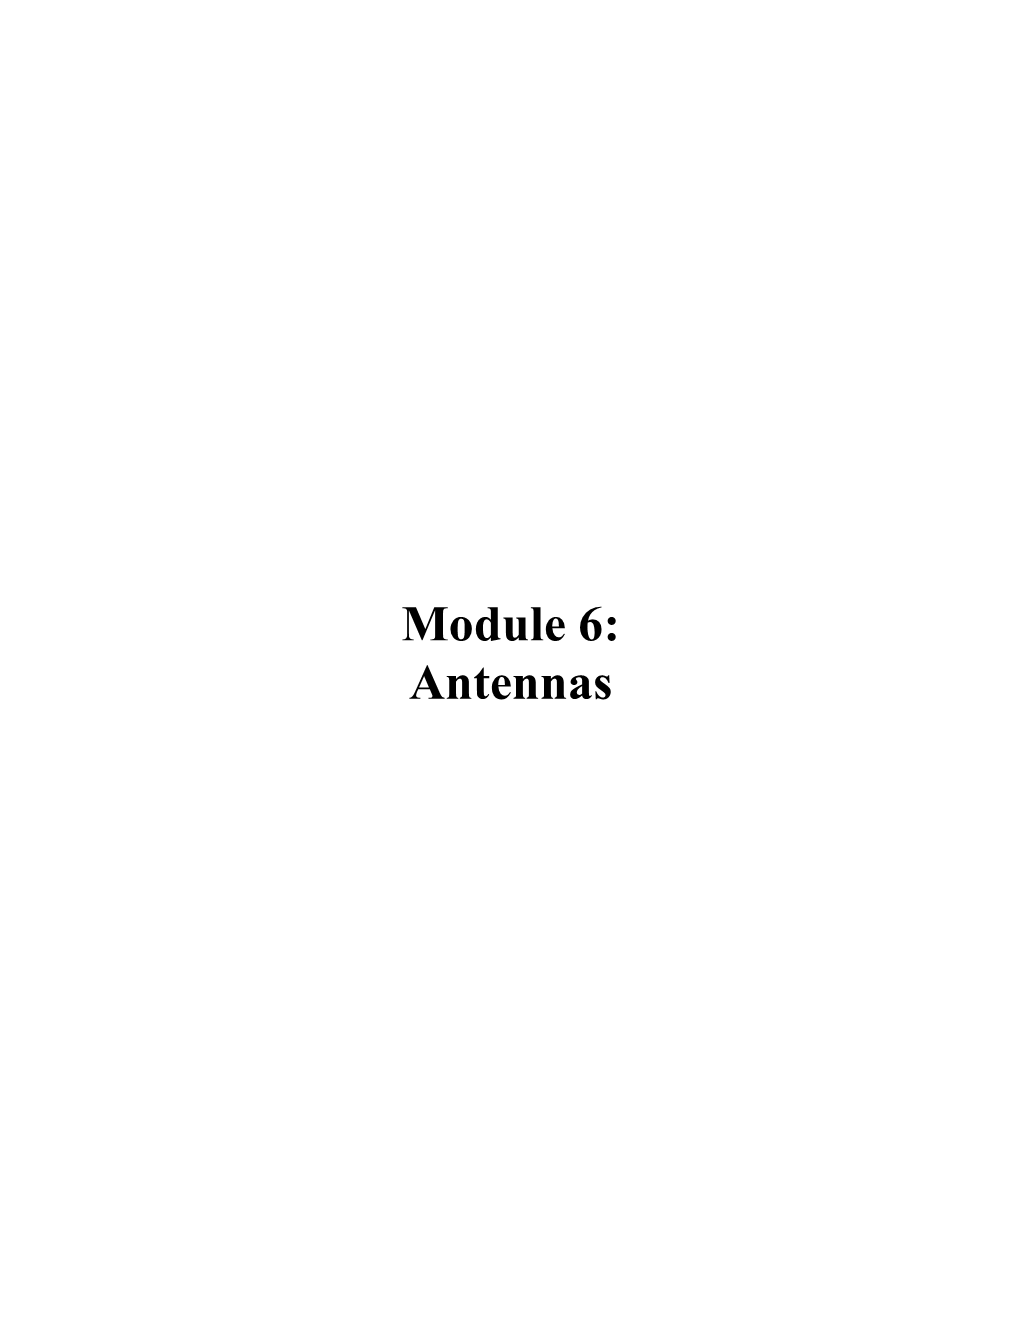 Module 6: Antennas 6.0 Introduction